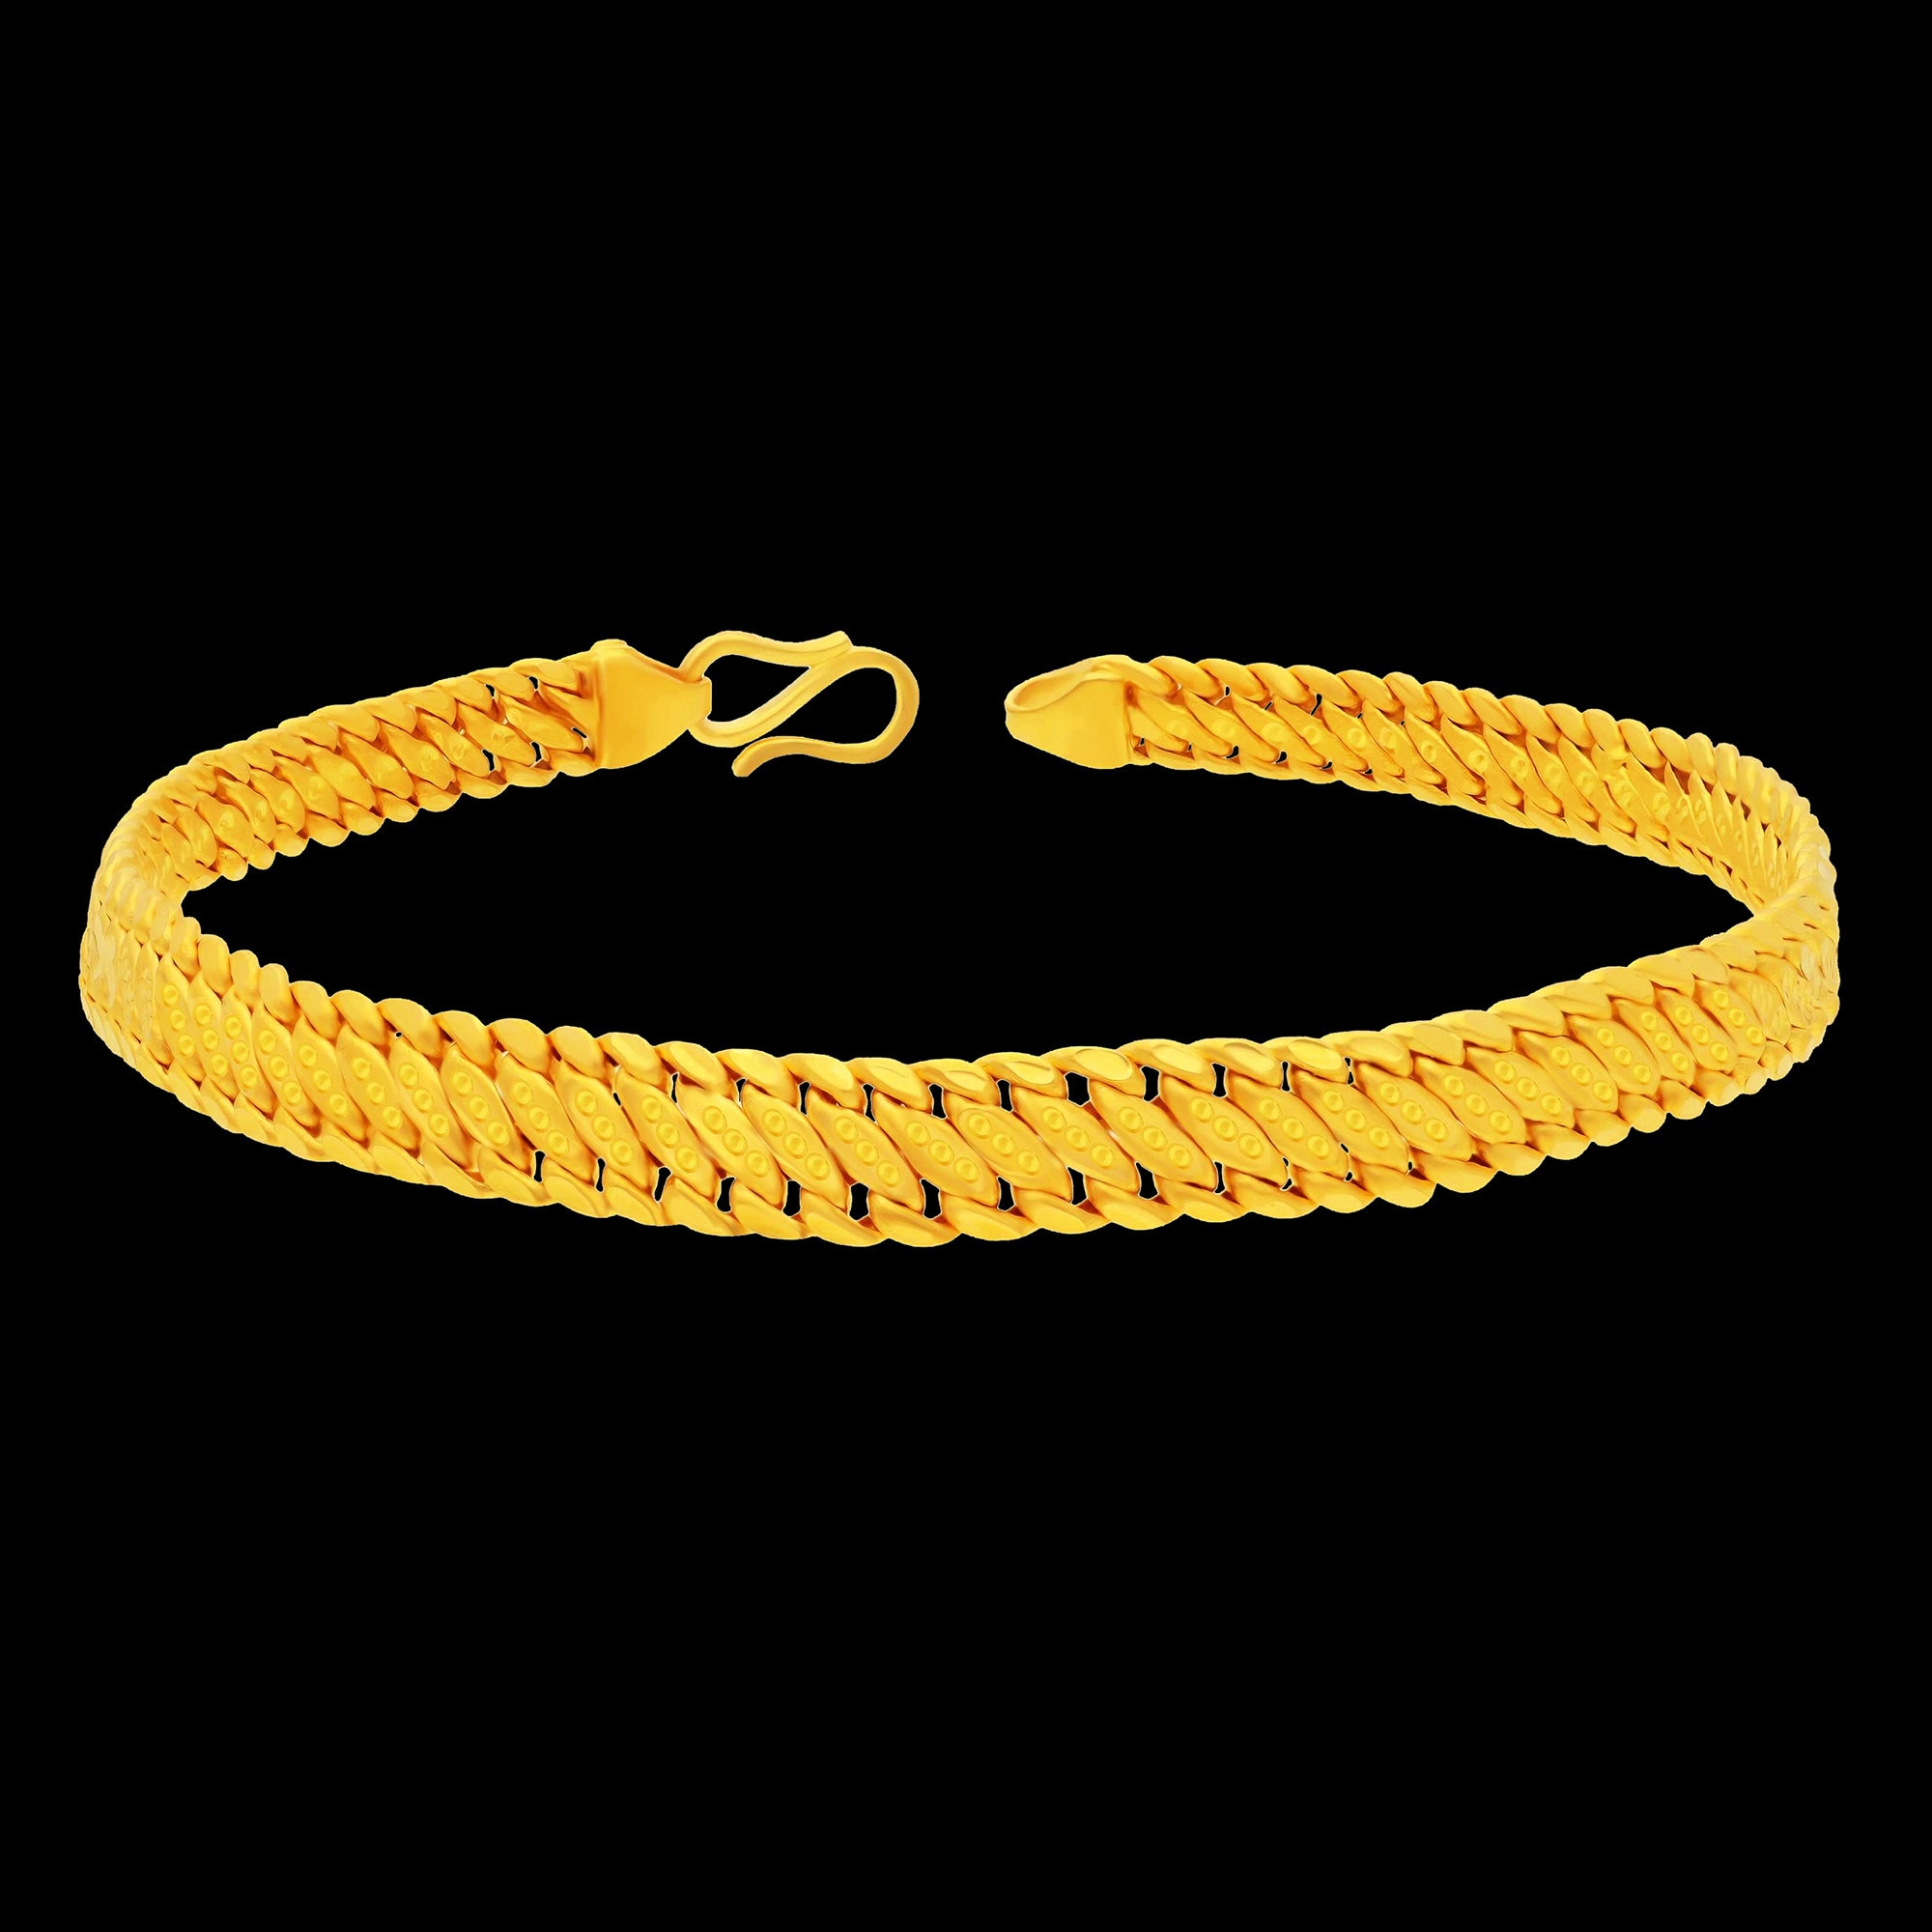 Fashion Mens Bracelet Cuff Bangle 18K Gold Plated Hand Chain Link Wristband  - Walmart.com